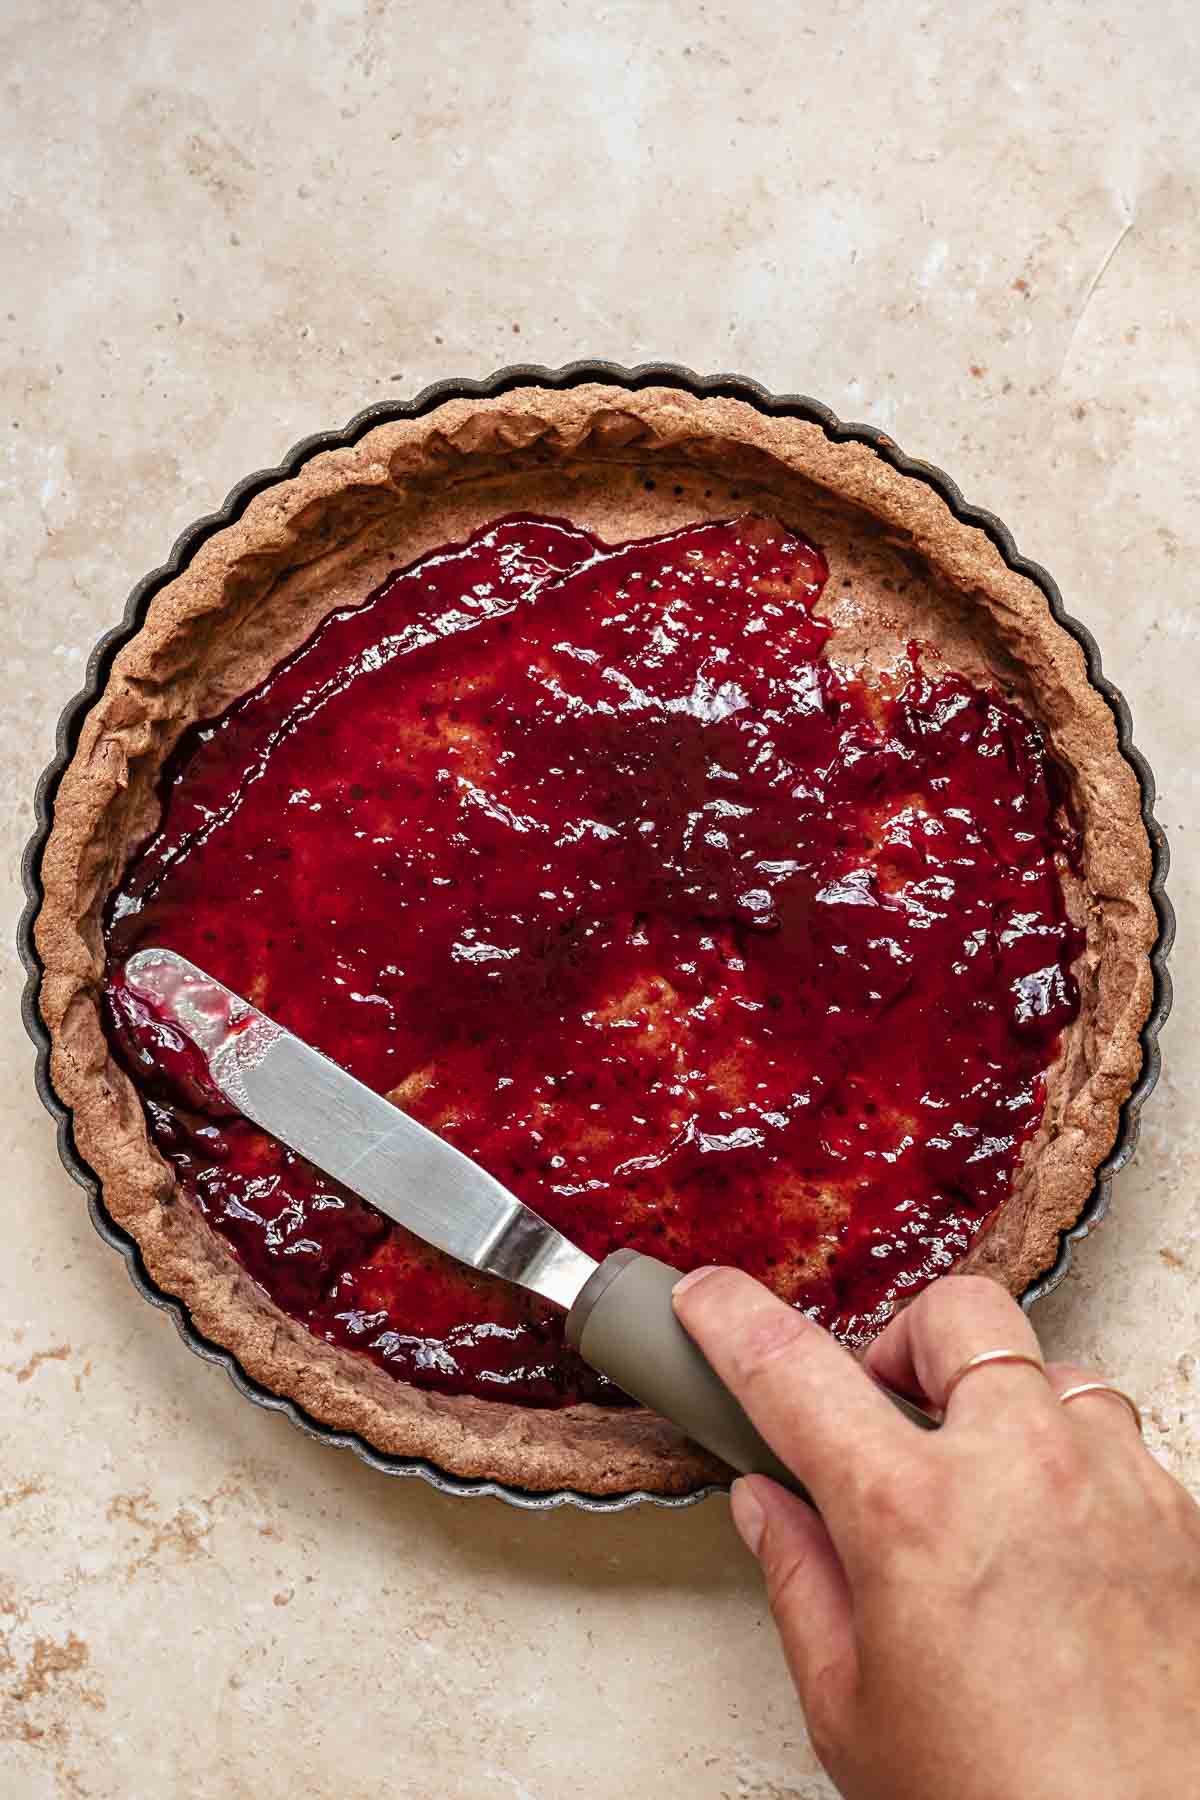 An offset spatula spreads raspberry jam onto a cooked tart crust.